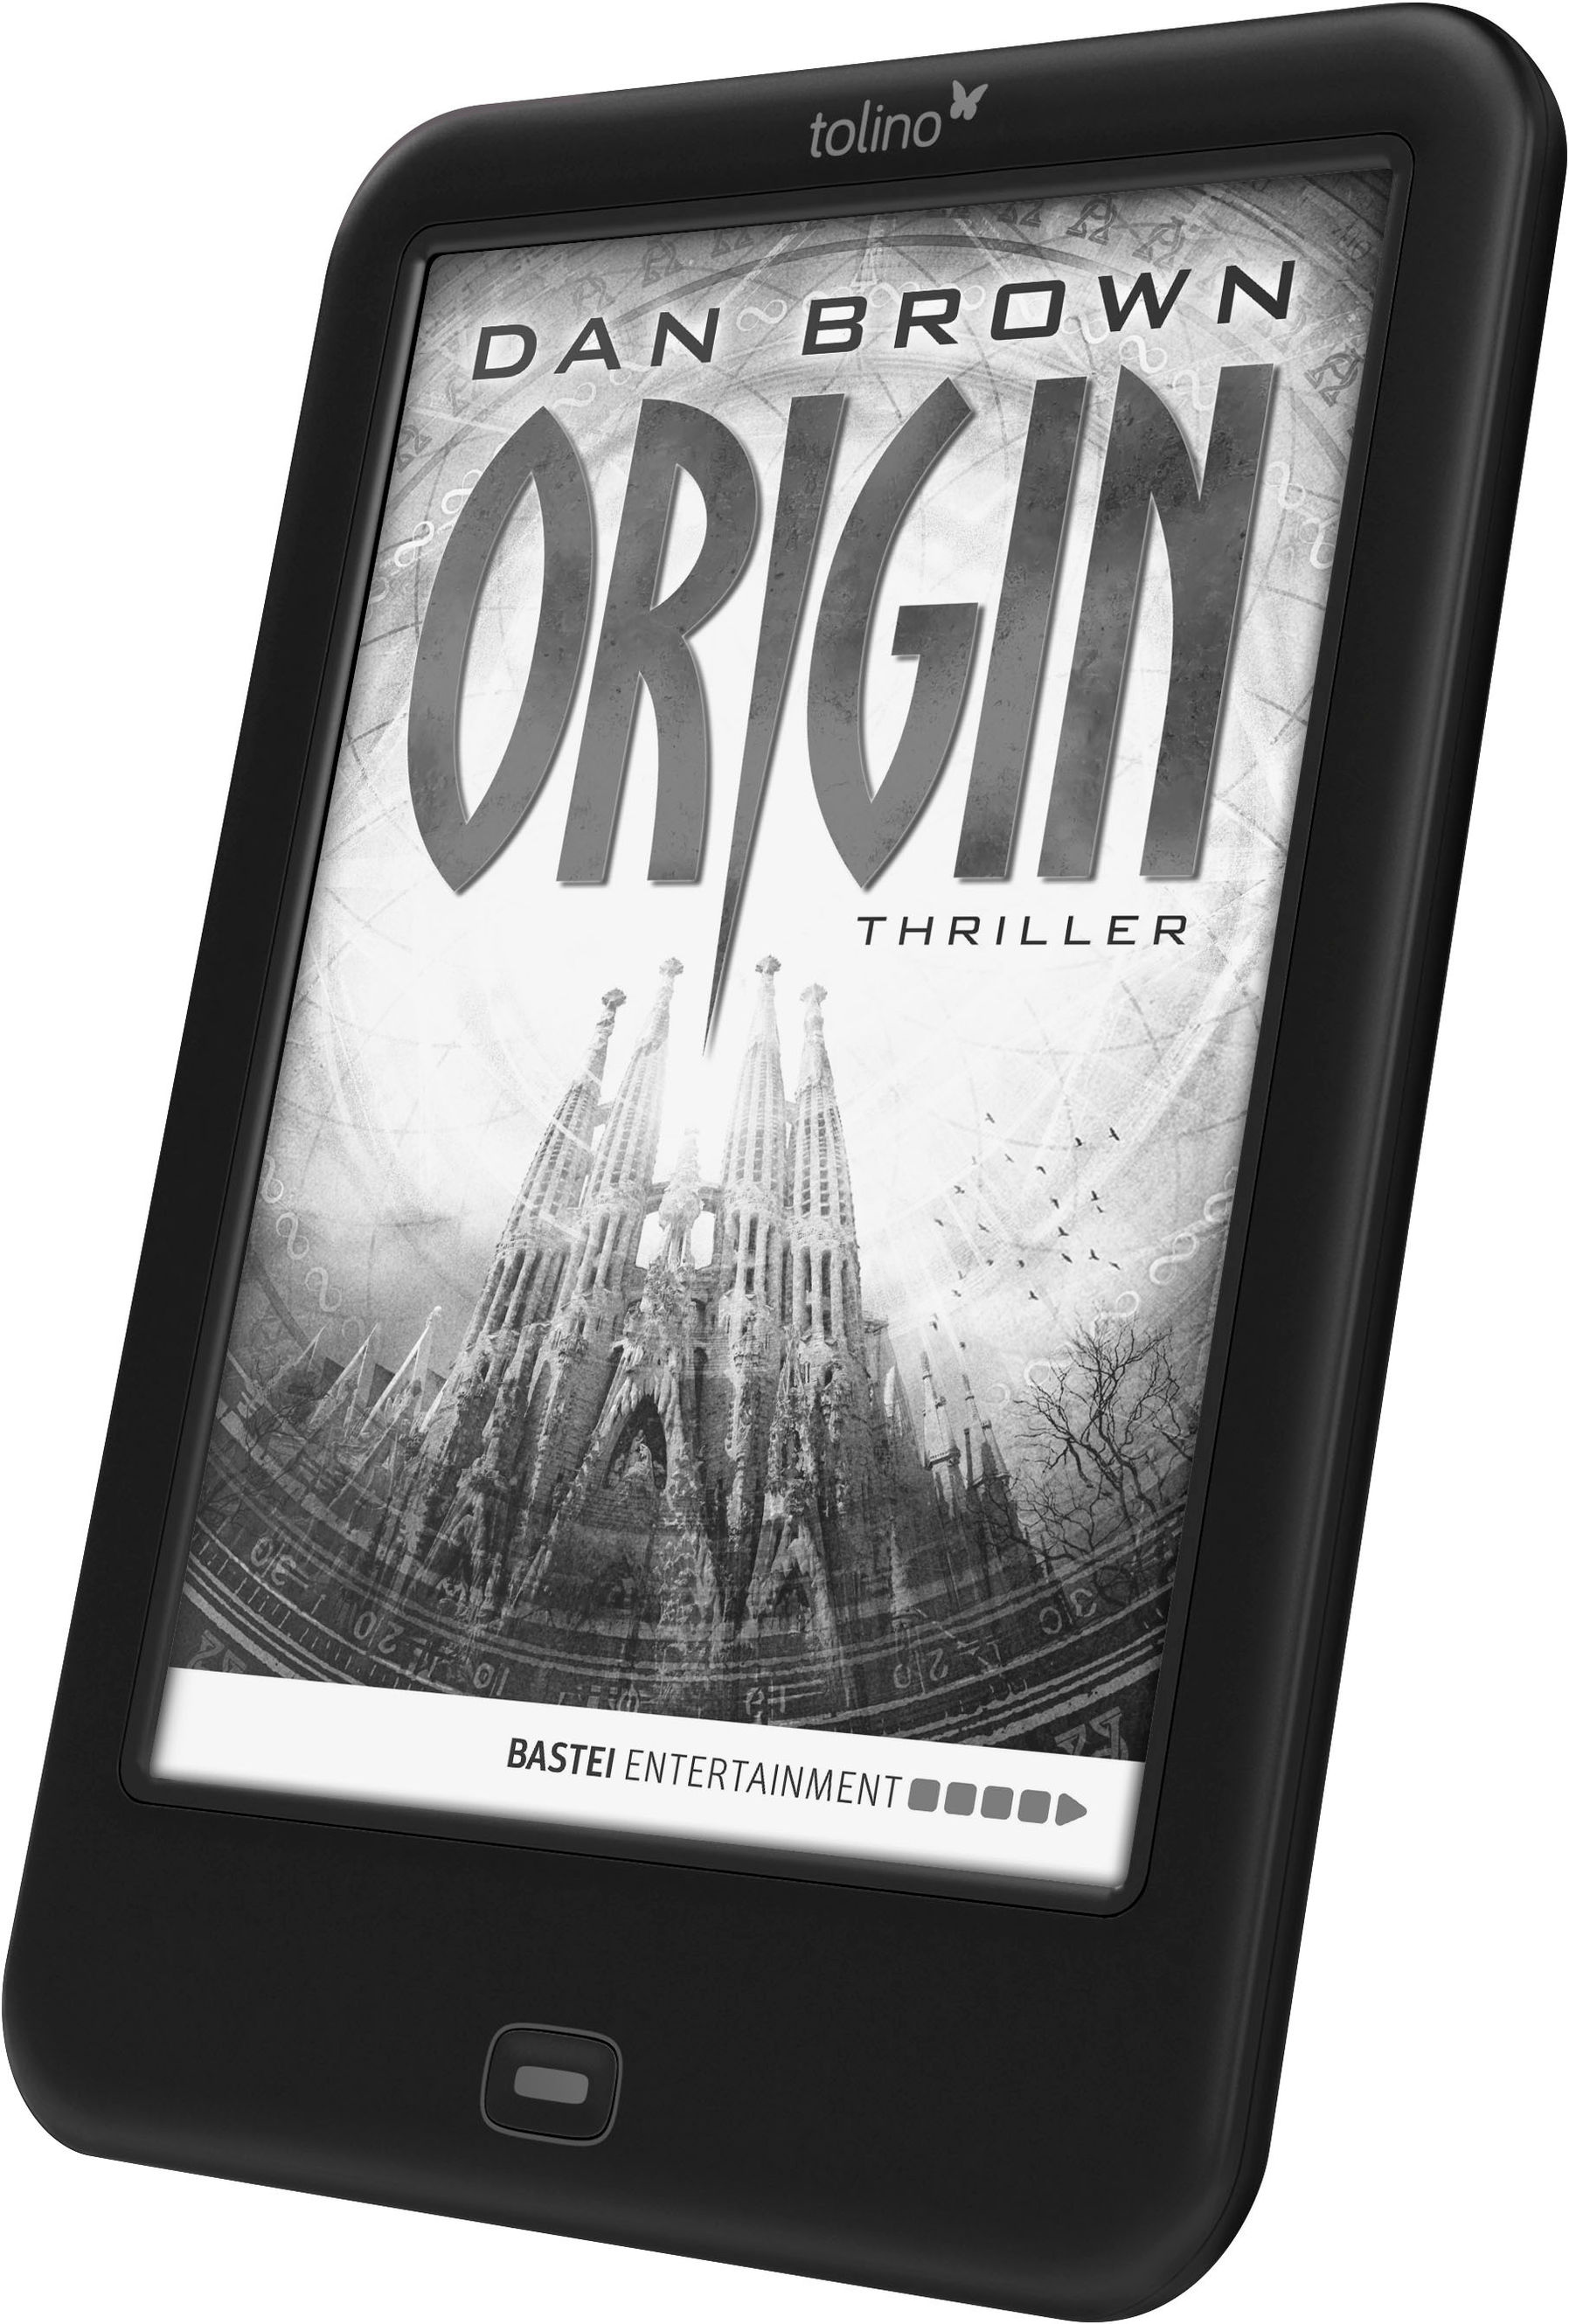 Kommentare zu tolino shine 2 HD eBook-Reader + eBook Origin Dan Brown -  Weltbild.de